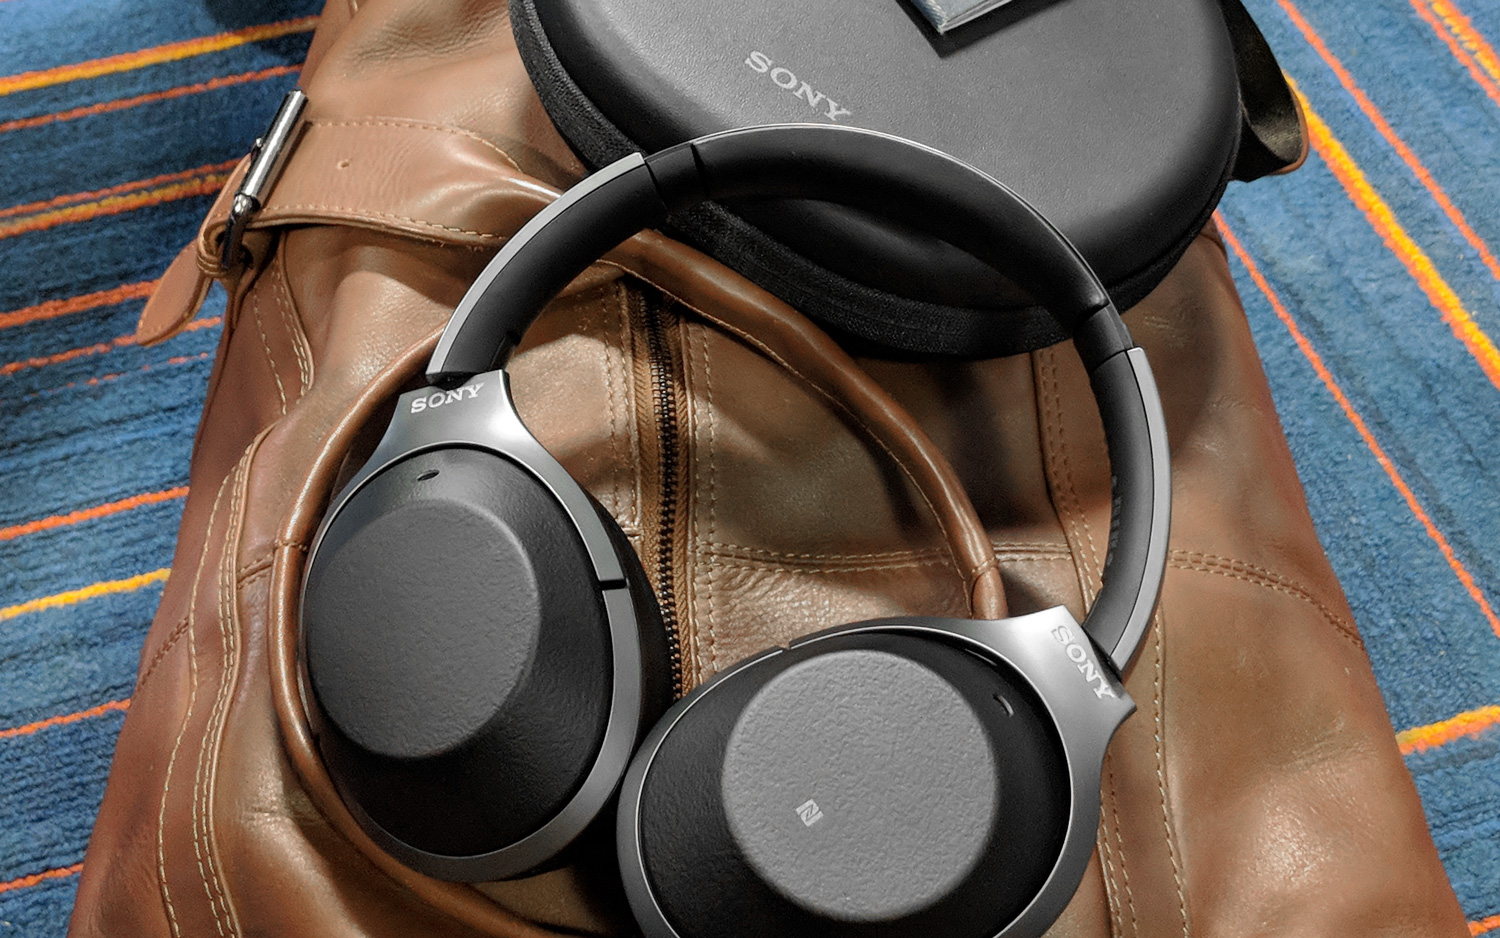 Sony WH-1000xM2 Headphones Review: A Killer Bose Alternative 